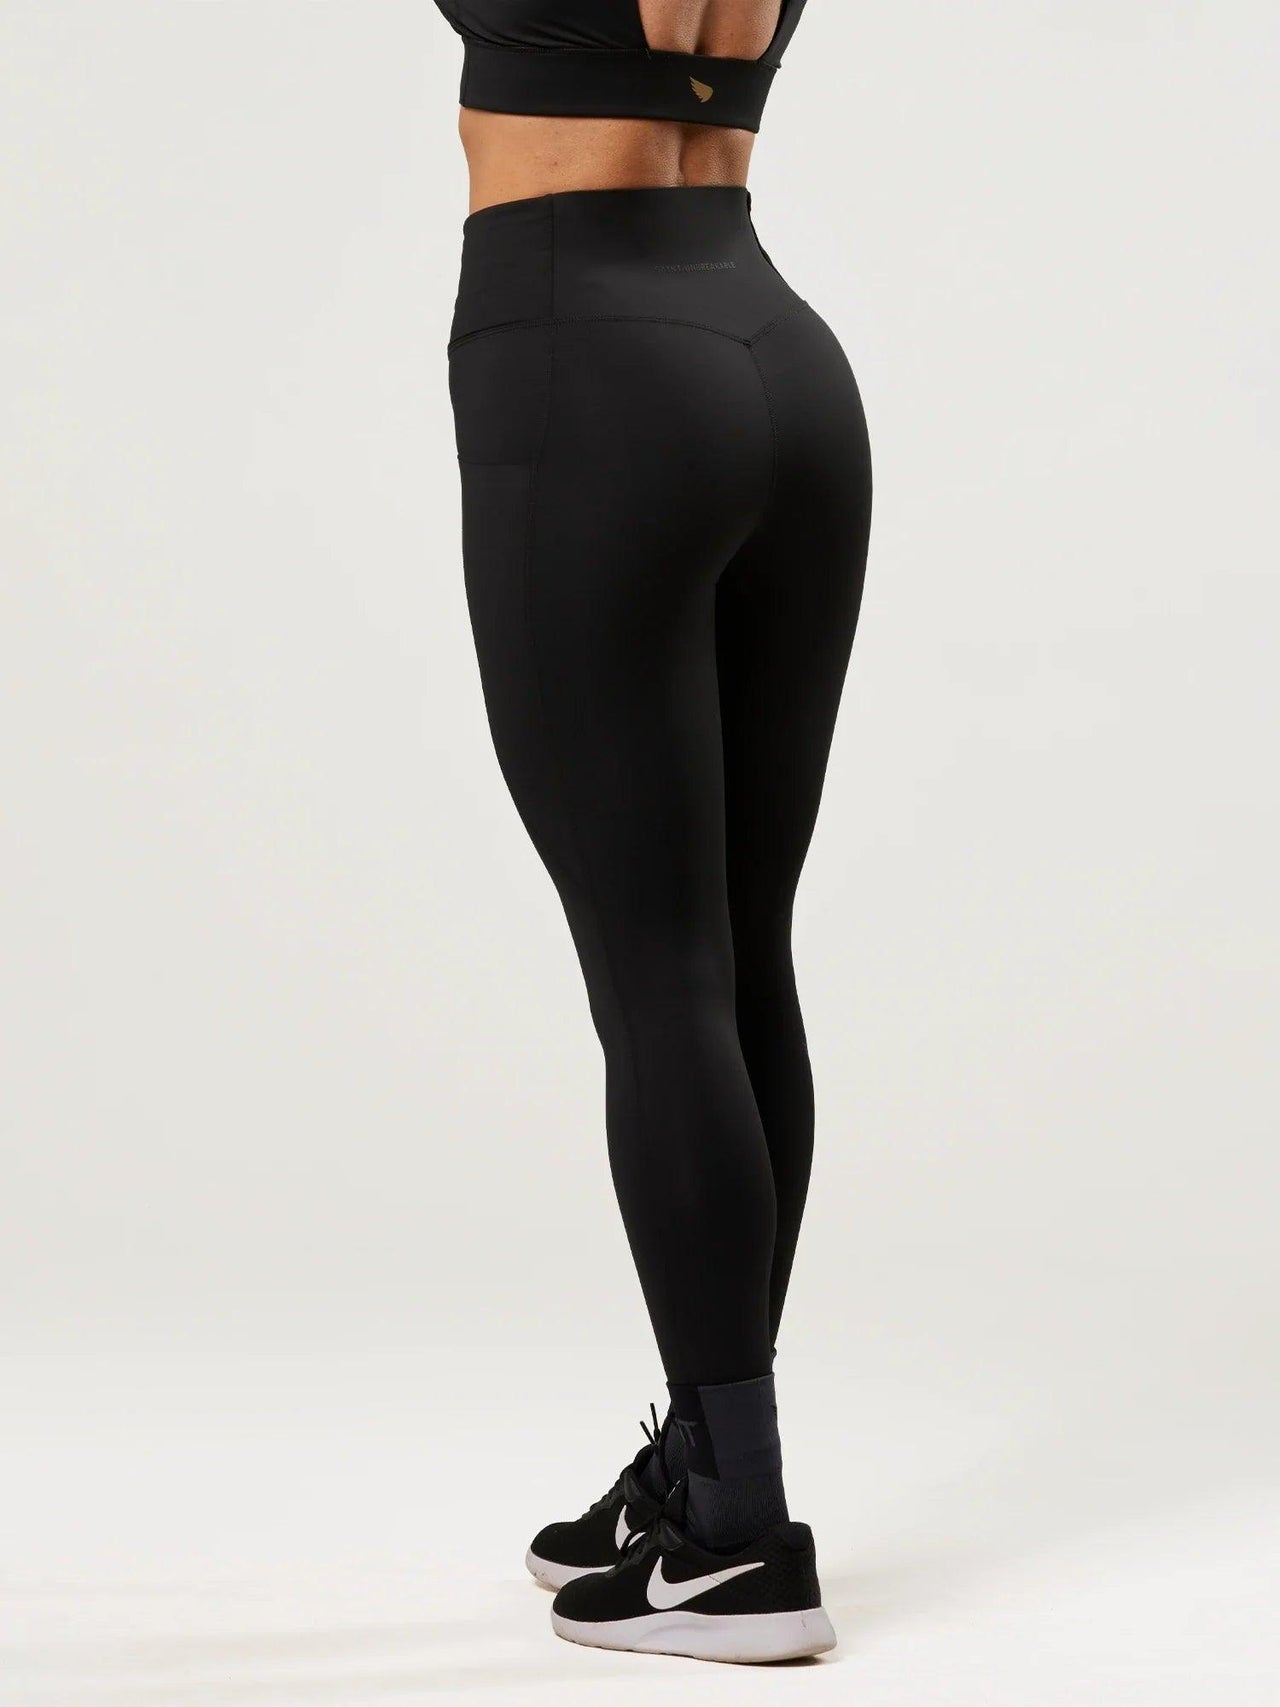 Carbon 38 Women's Open Back Capri Tank Top Leggings Black Size XS S Lot 2